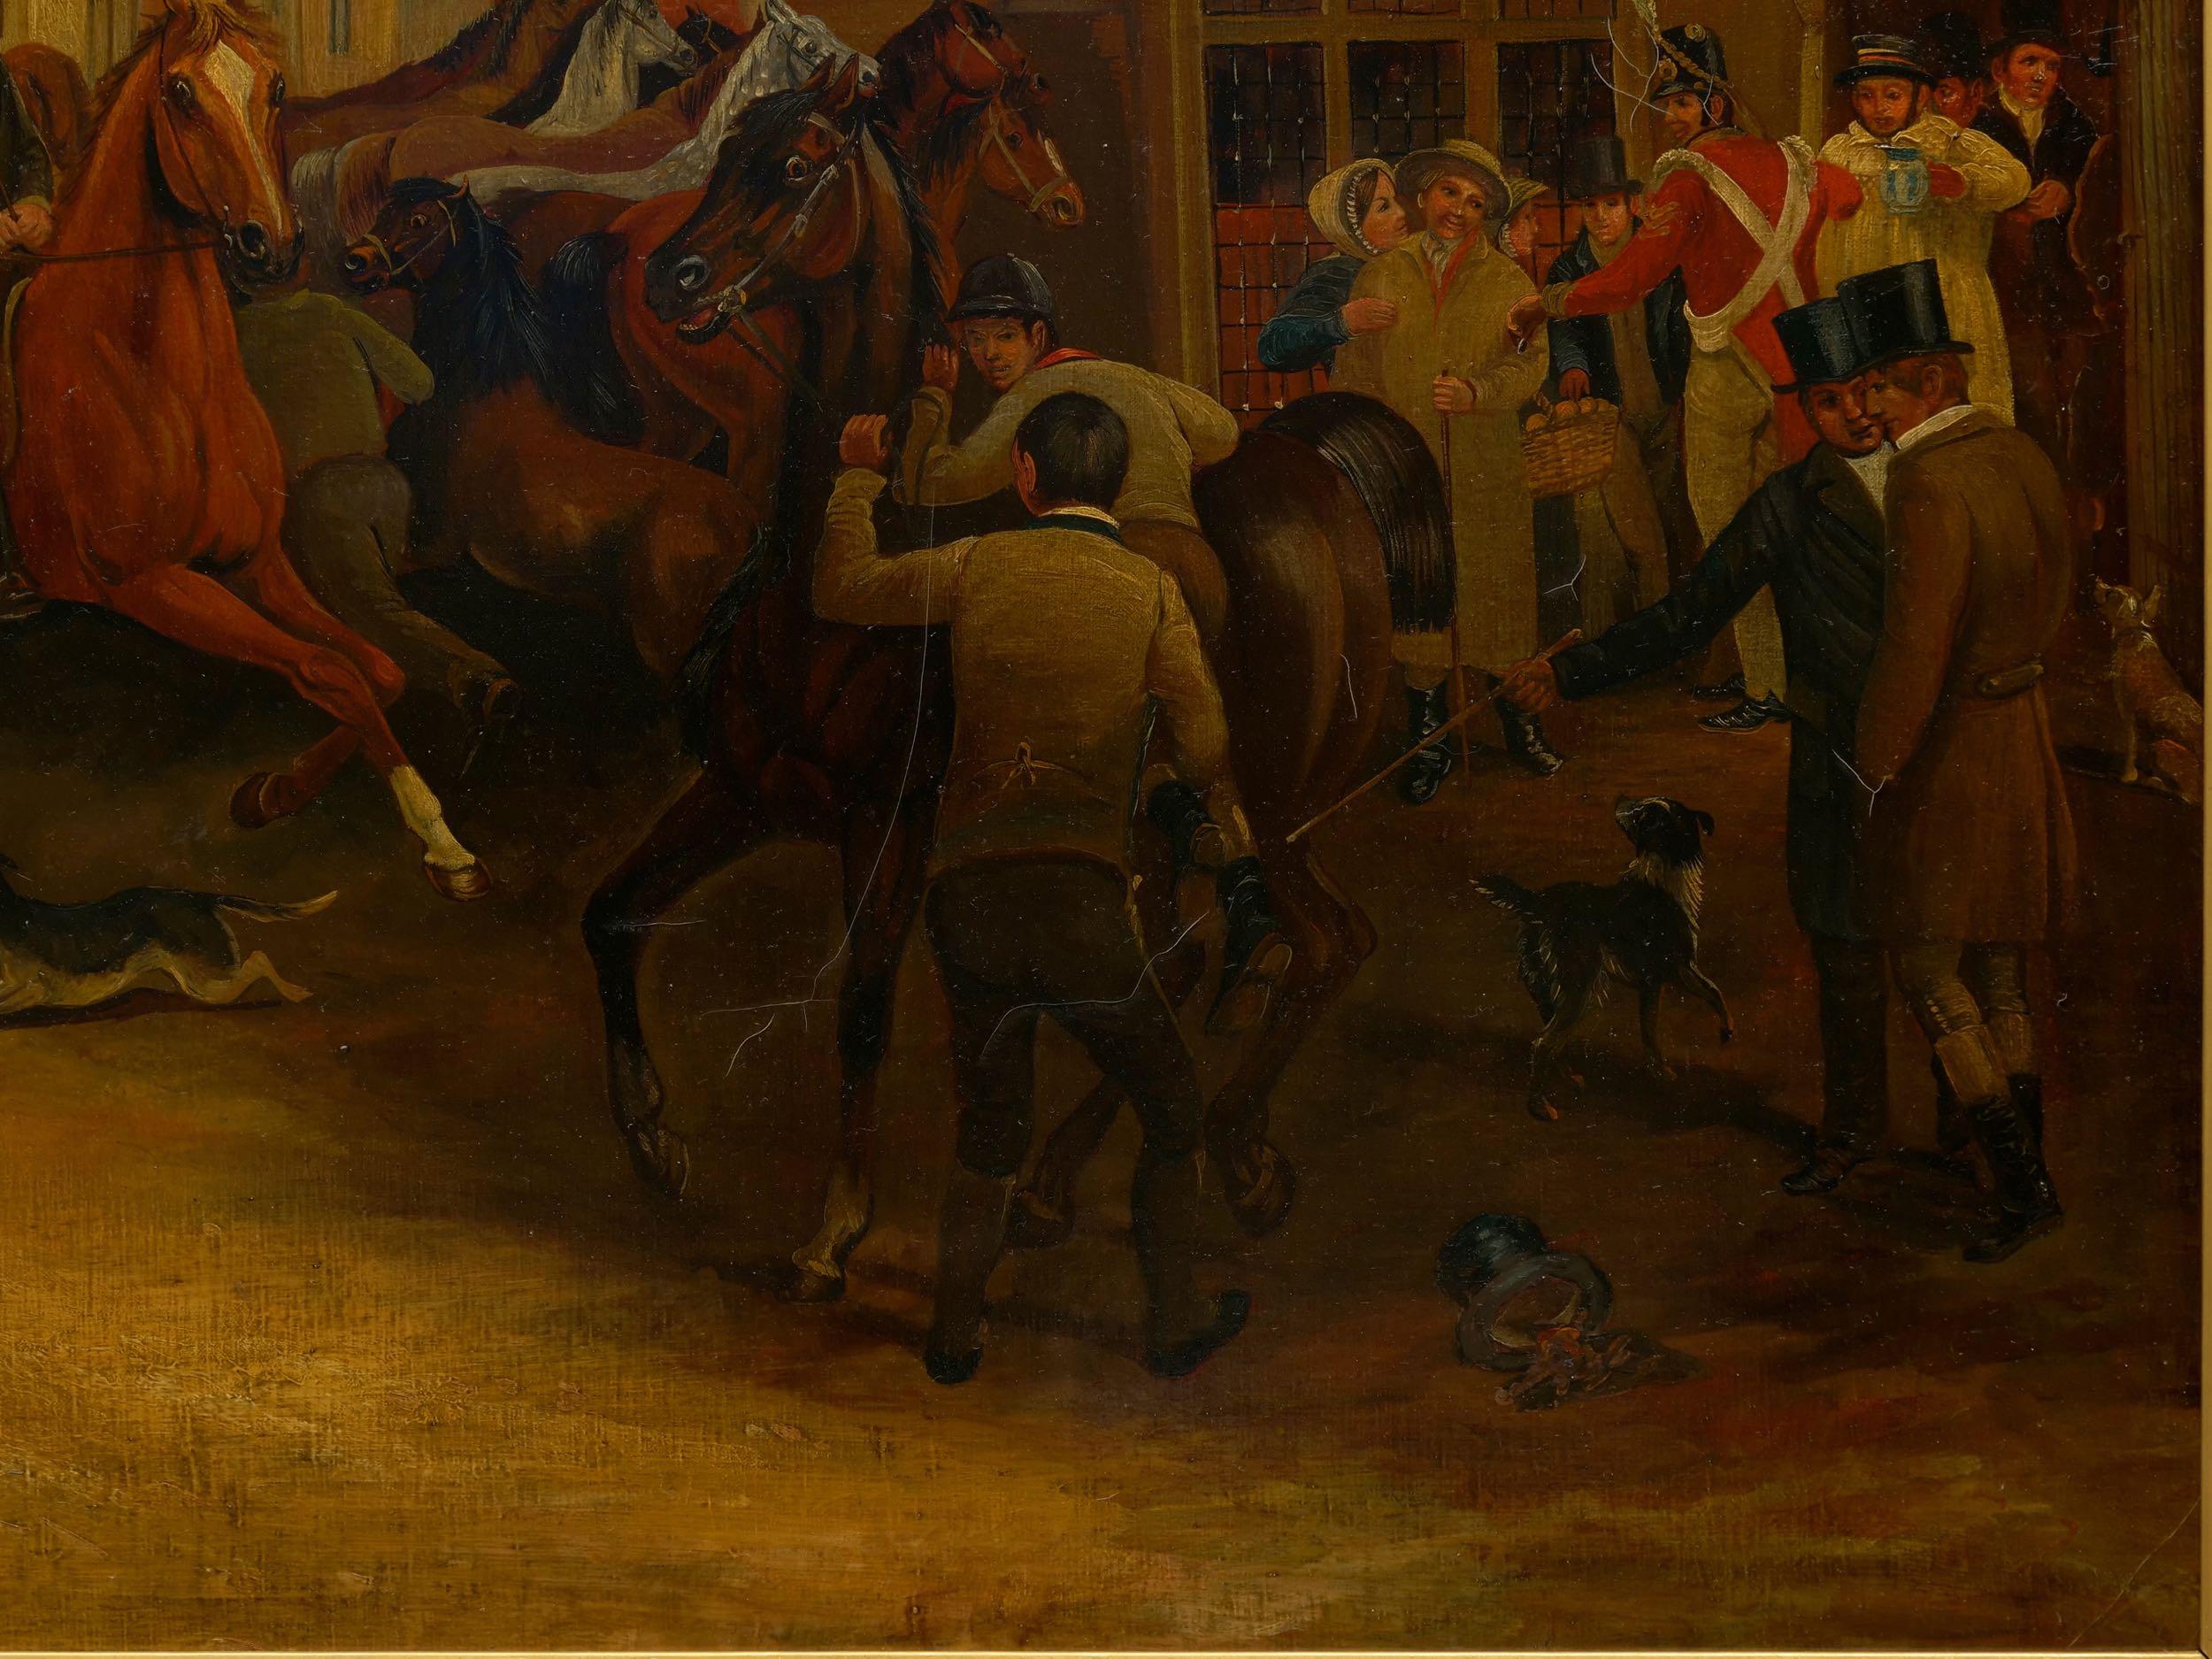 Canvas “Barnet Fair” '1845' Antique English Oil Painting of Horses by Thomas Smythe